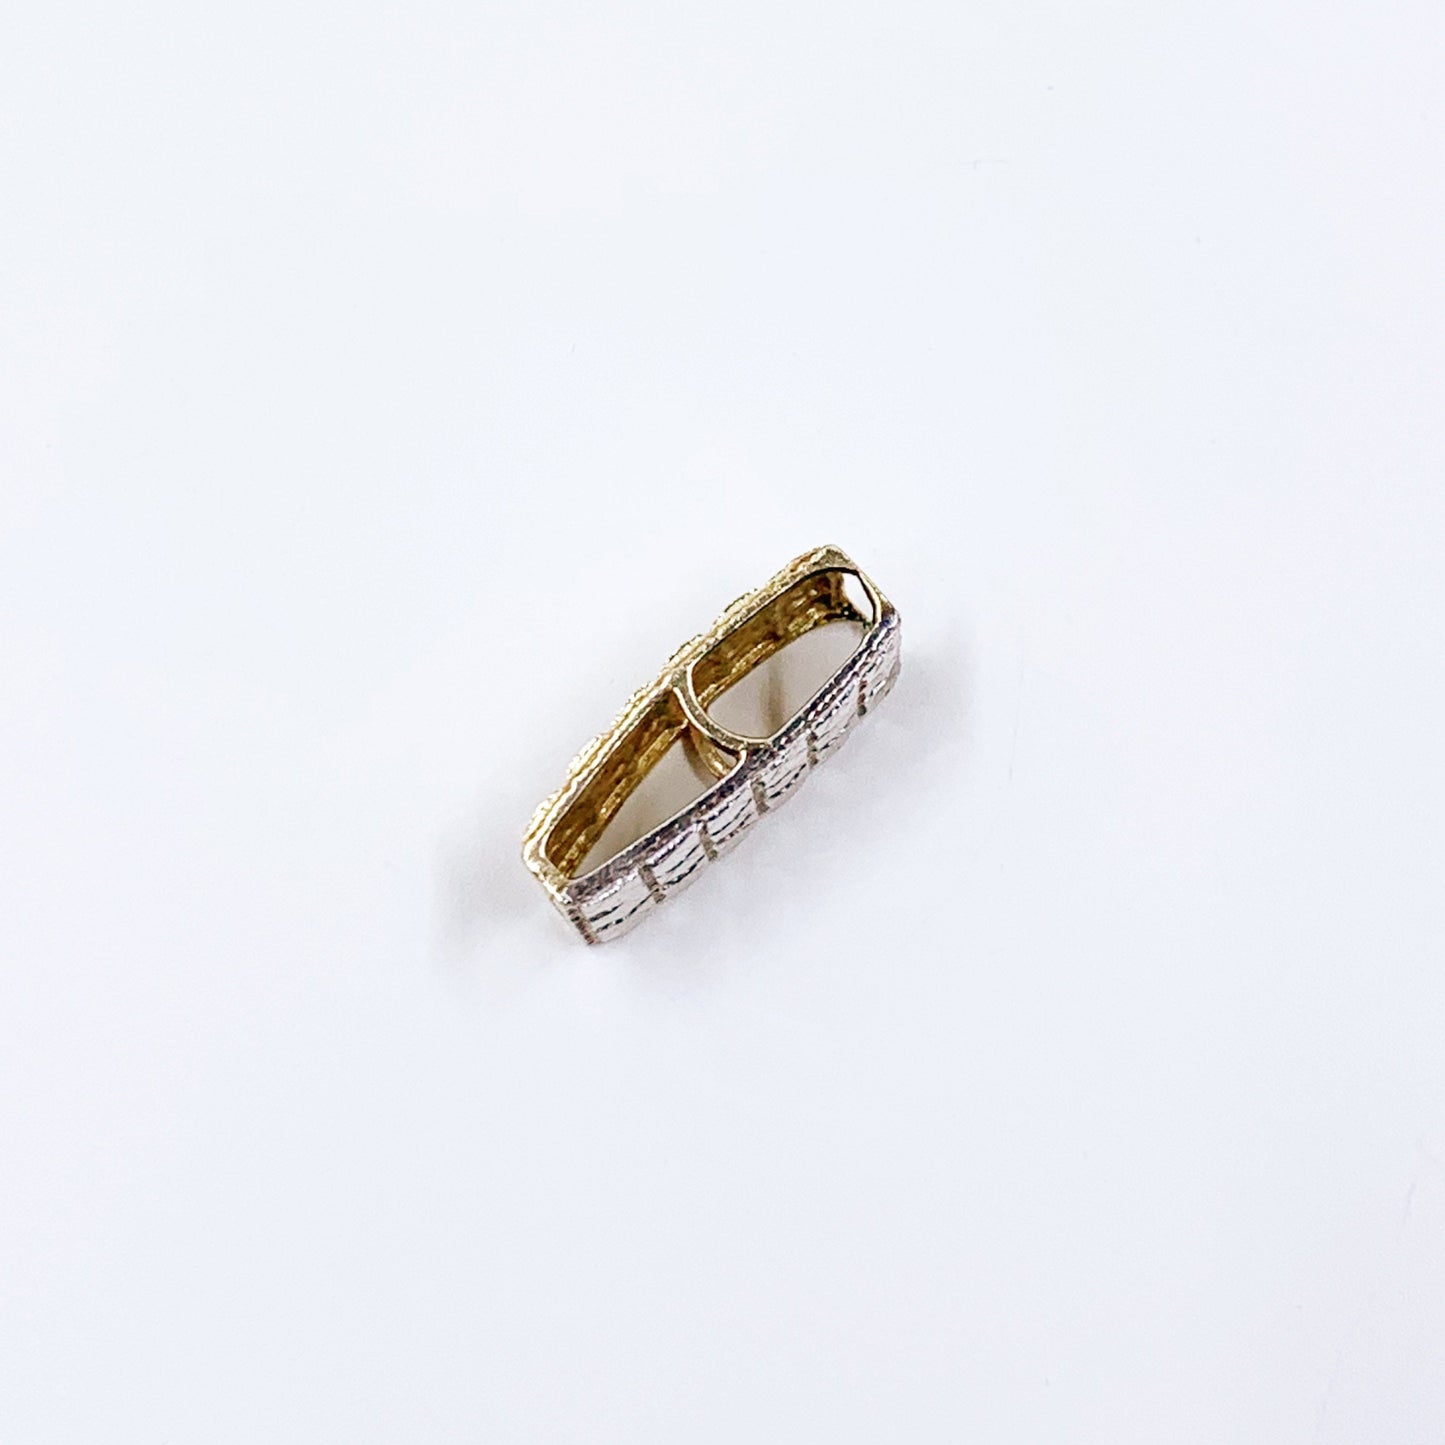 Vintage 14K Two Tone Gold Diamond Cut Design Slide Pendant | 14K White and Yellow Gold Omega Slide Charm Pendant